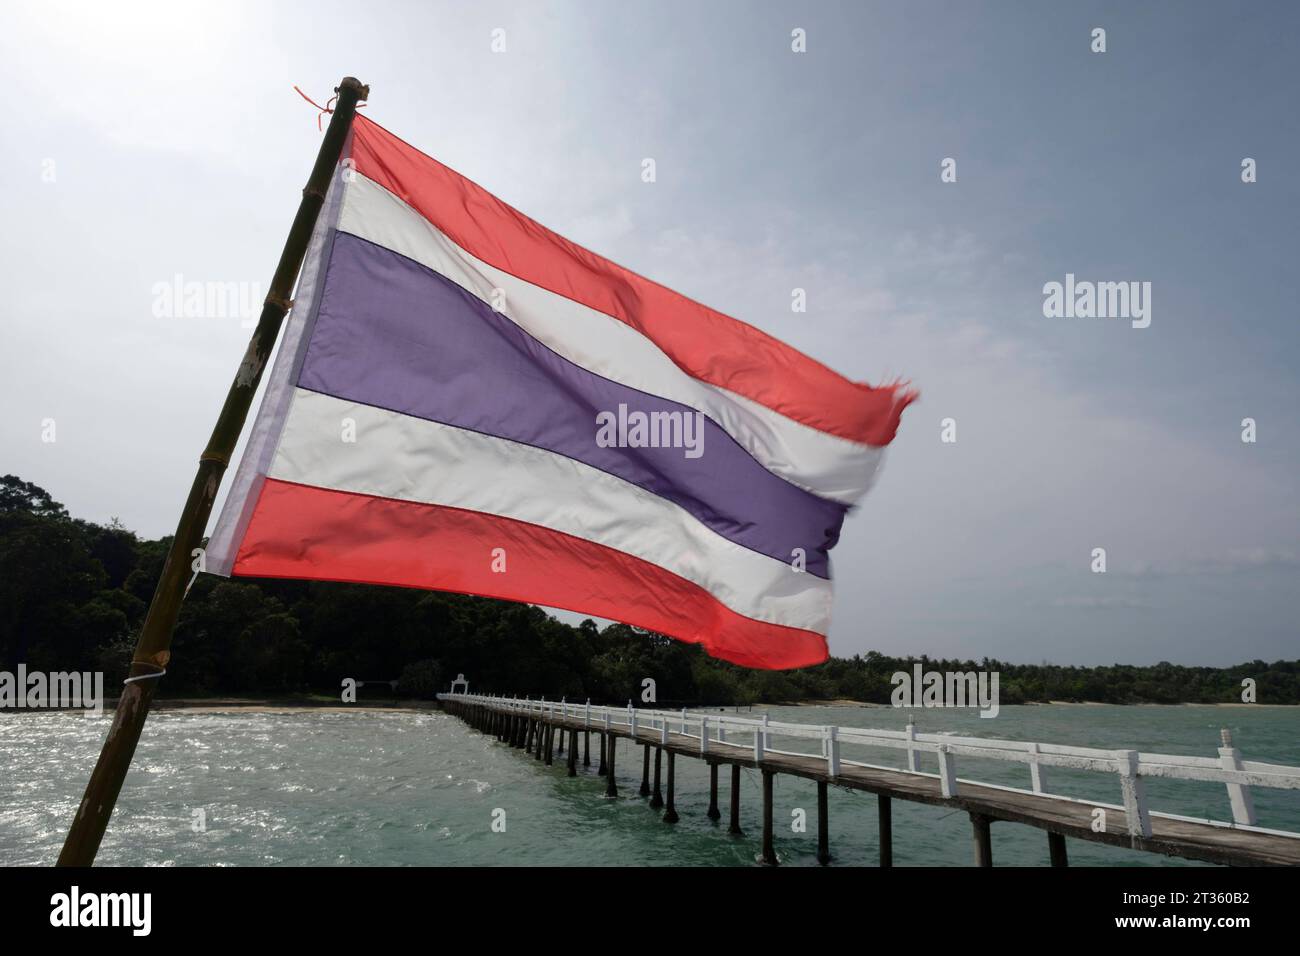 Thailändische Fahne - Koh Phayam - Thailandia, Dezember 2022 *** bandiera tailandese Koh Phayam Thailandia, dicembre 2022 credito: Imago/Alamy Live News Foto Stock